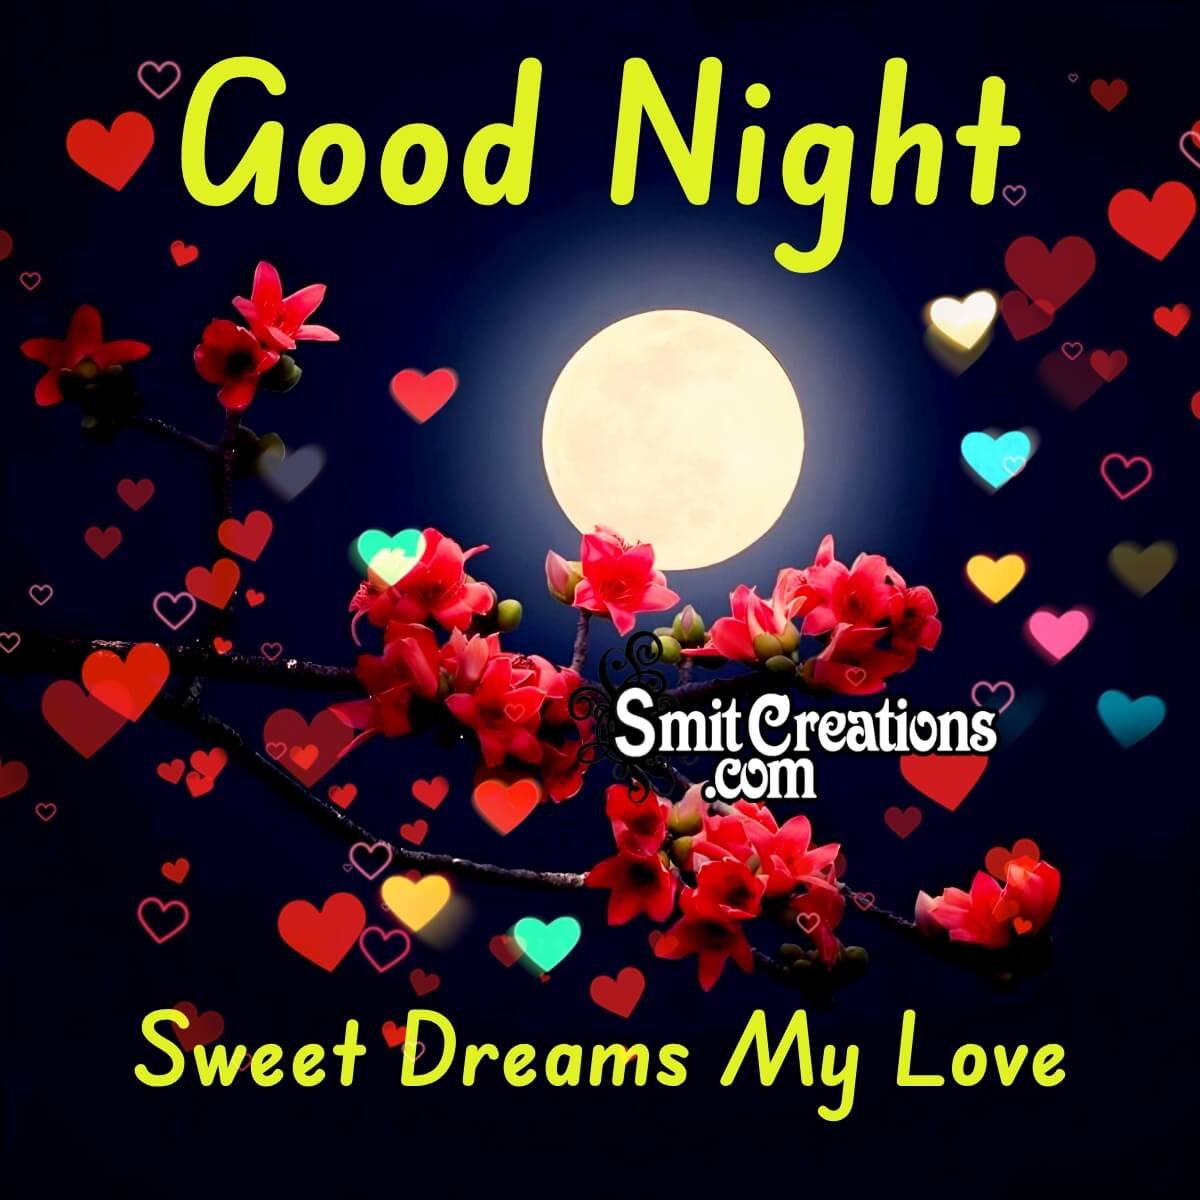 Good Night Sweet Dreams My Love